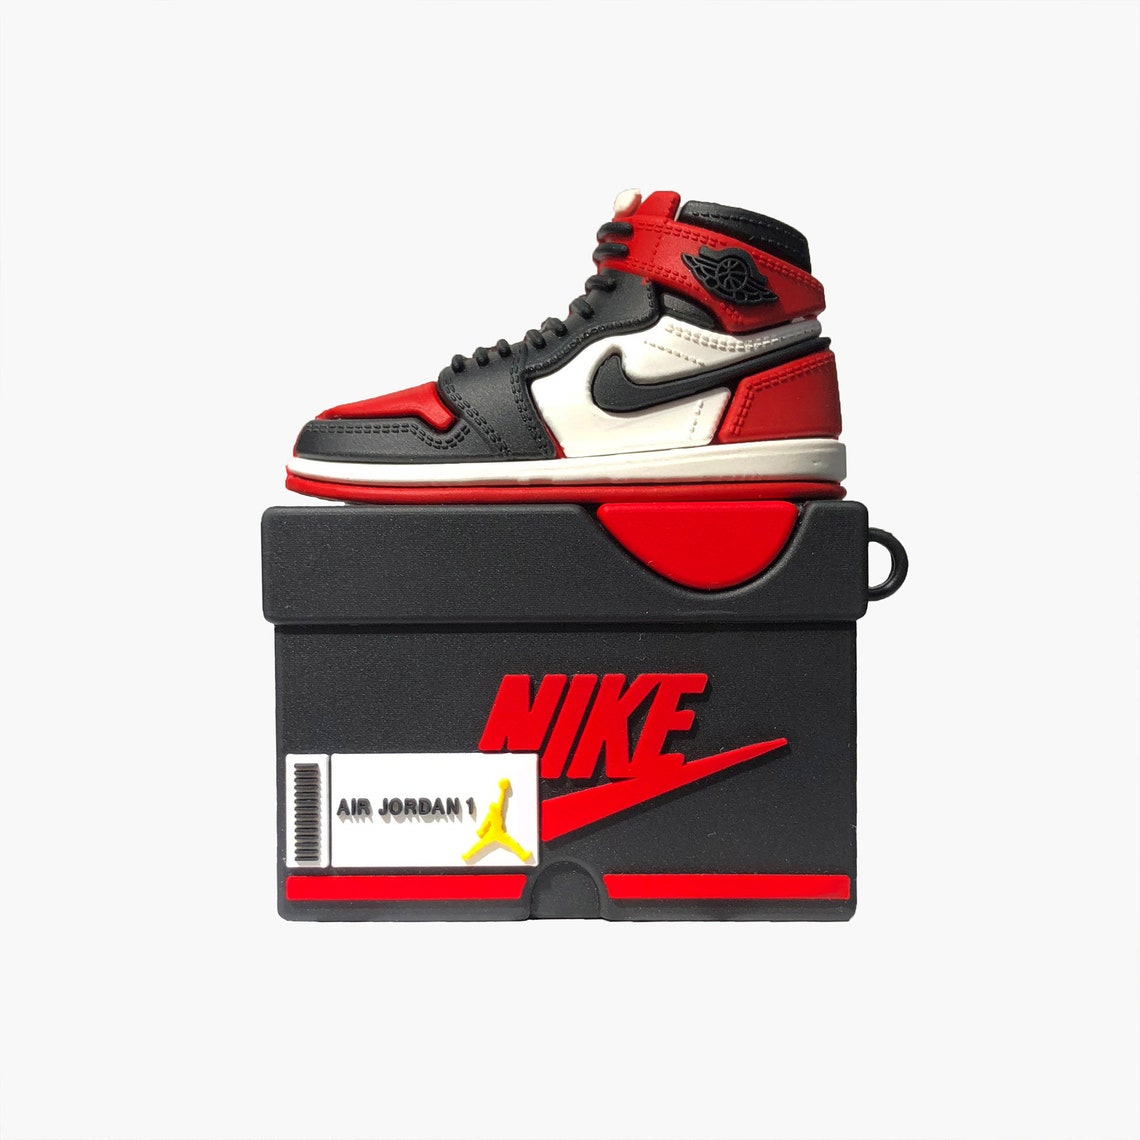 Air Jordan 1 Sneaker Airpods Case Nike shoe box AirPods Case | Etsy